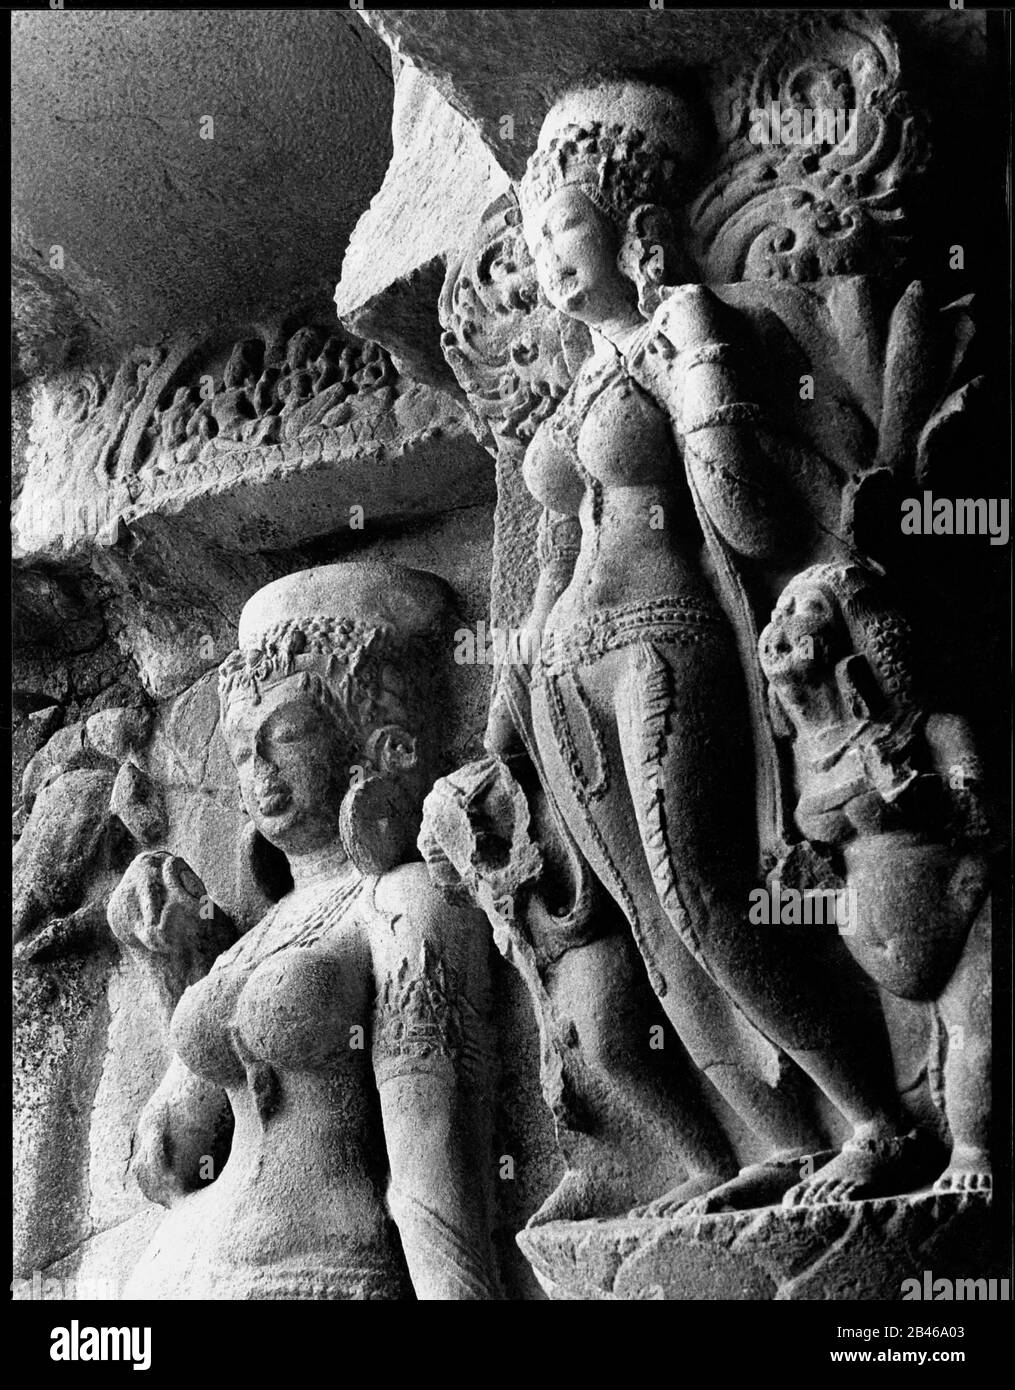 Ganga y Yamuna, cueva de Ellora, Patrimonio de la Humanidad de la UNESCO, Aurangabad, Maharashtra, India, Asia, 1977, antiguo cuadro vintage de 1900 Foto de stock